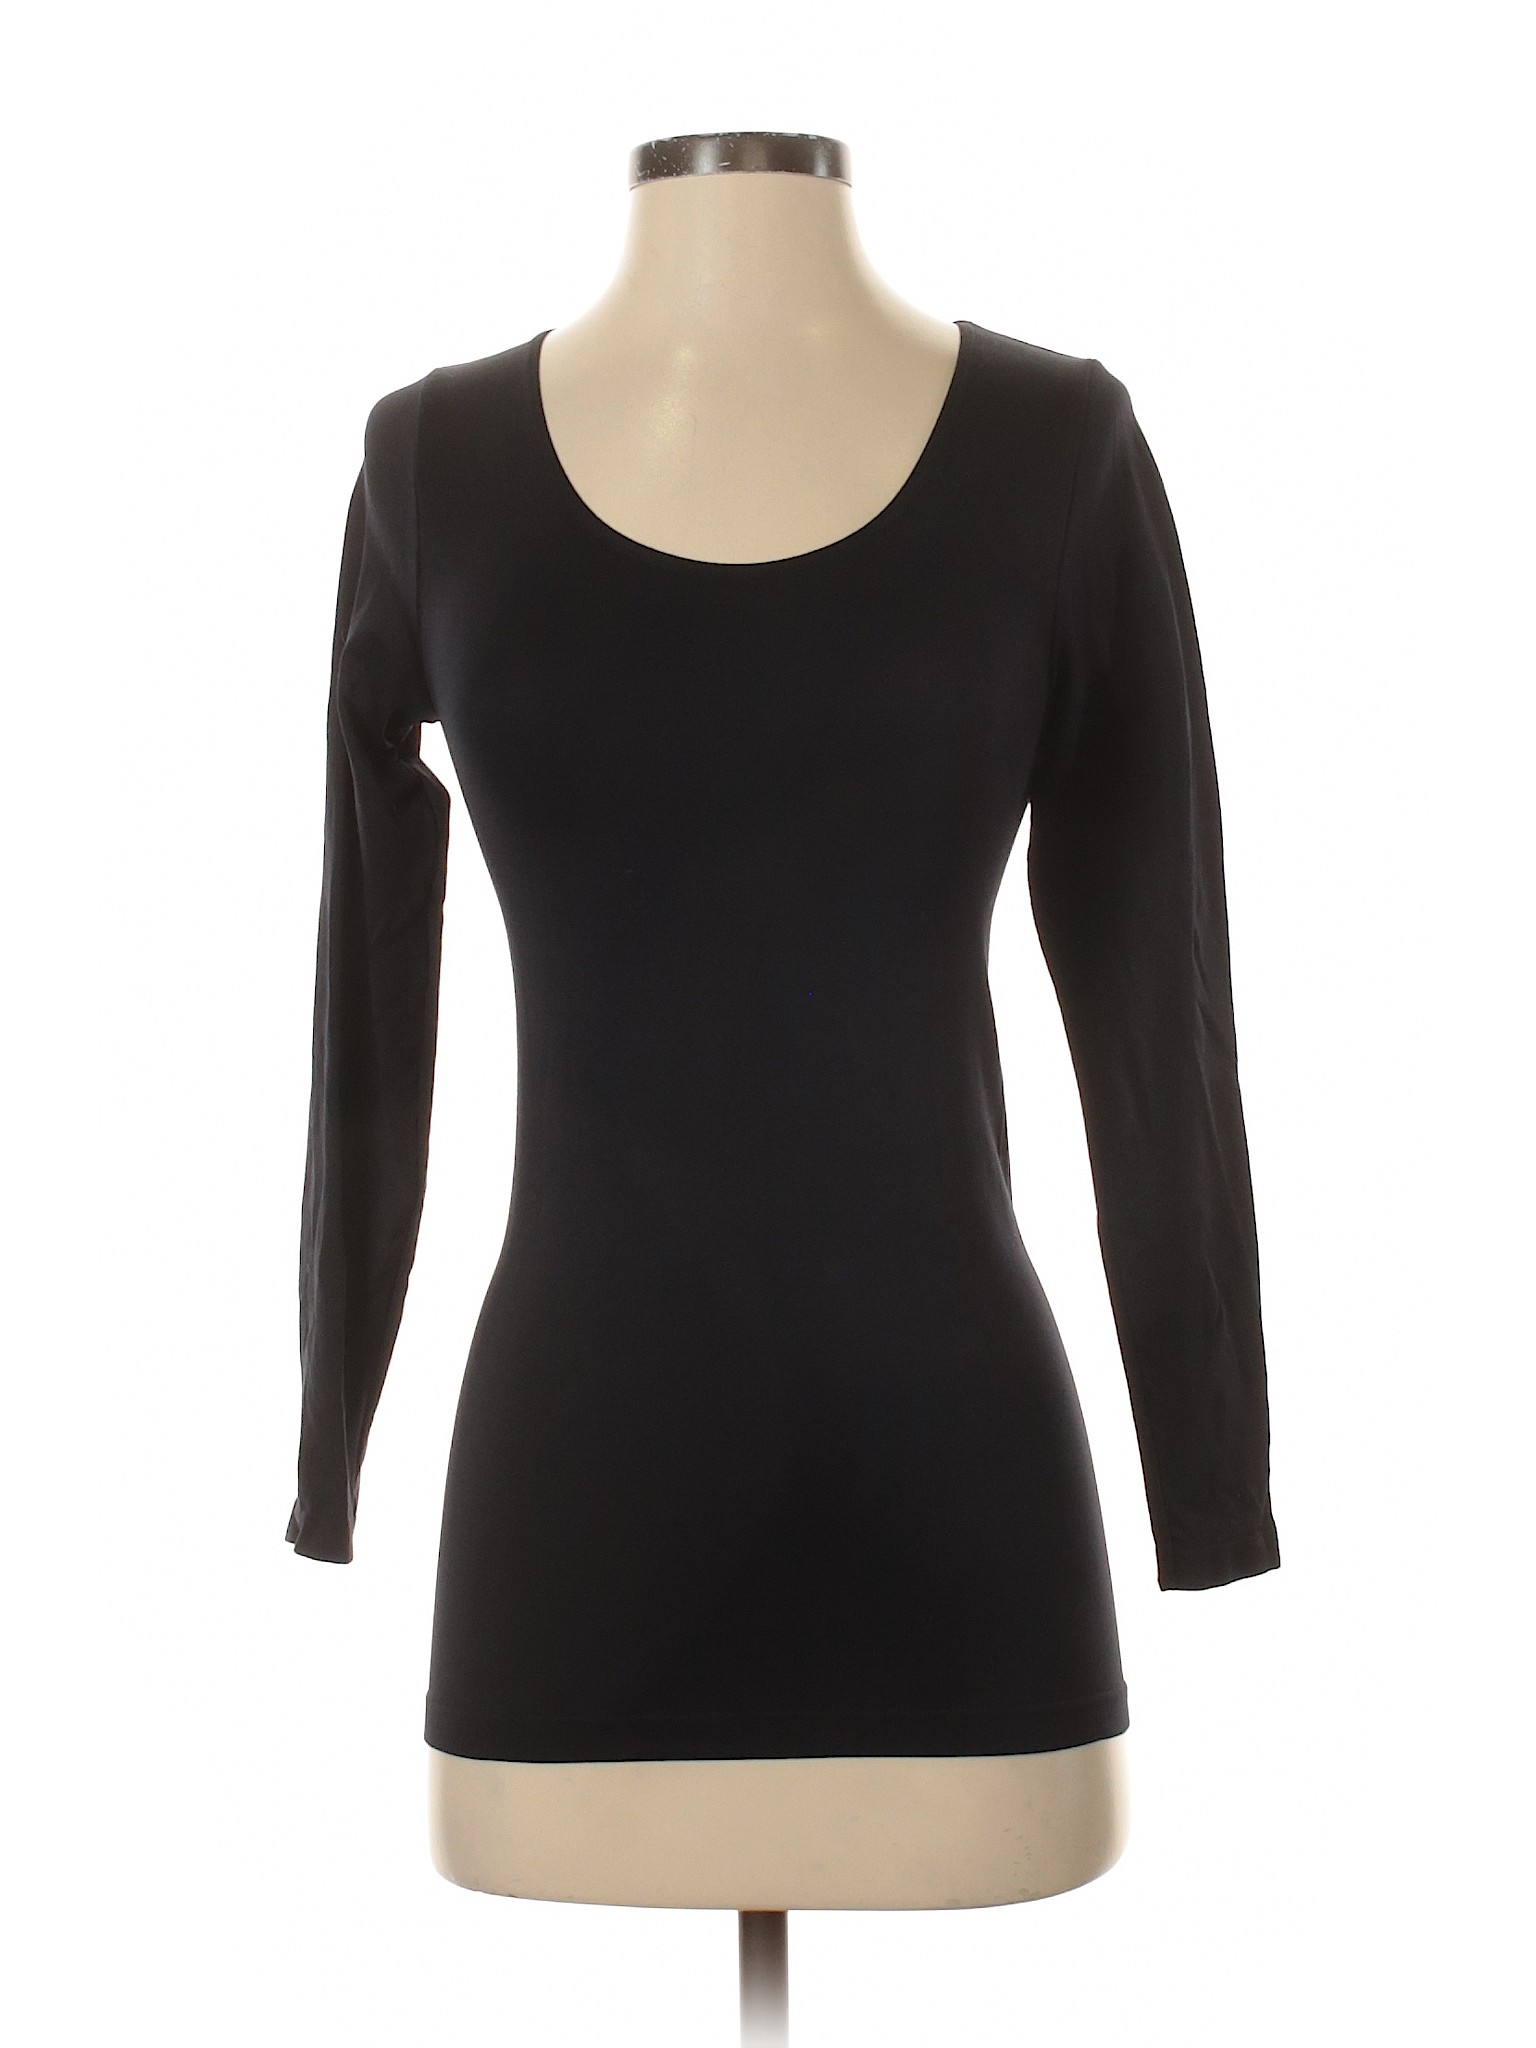 Venus Women Black Long Sleeve T-Shirt S | eBay